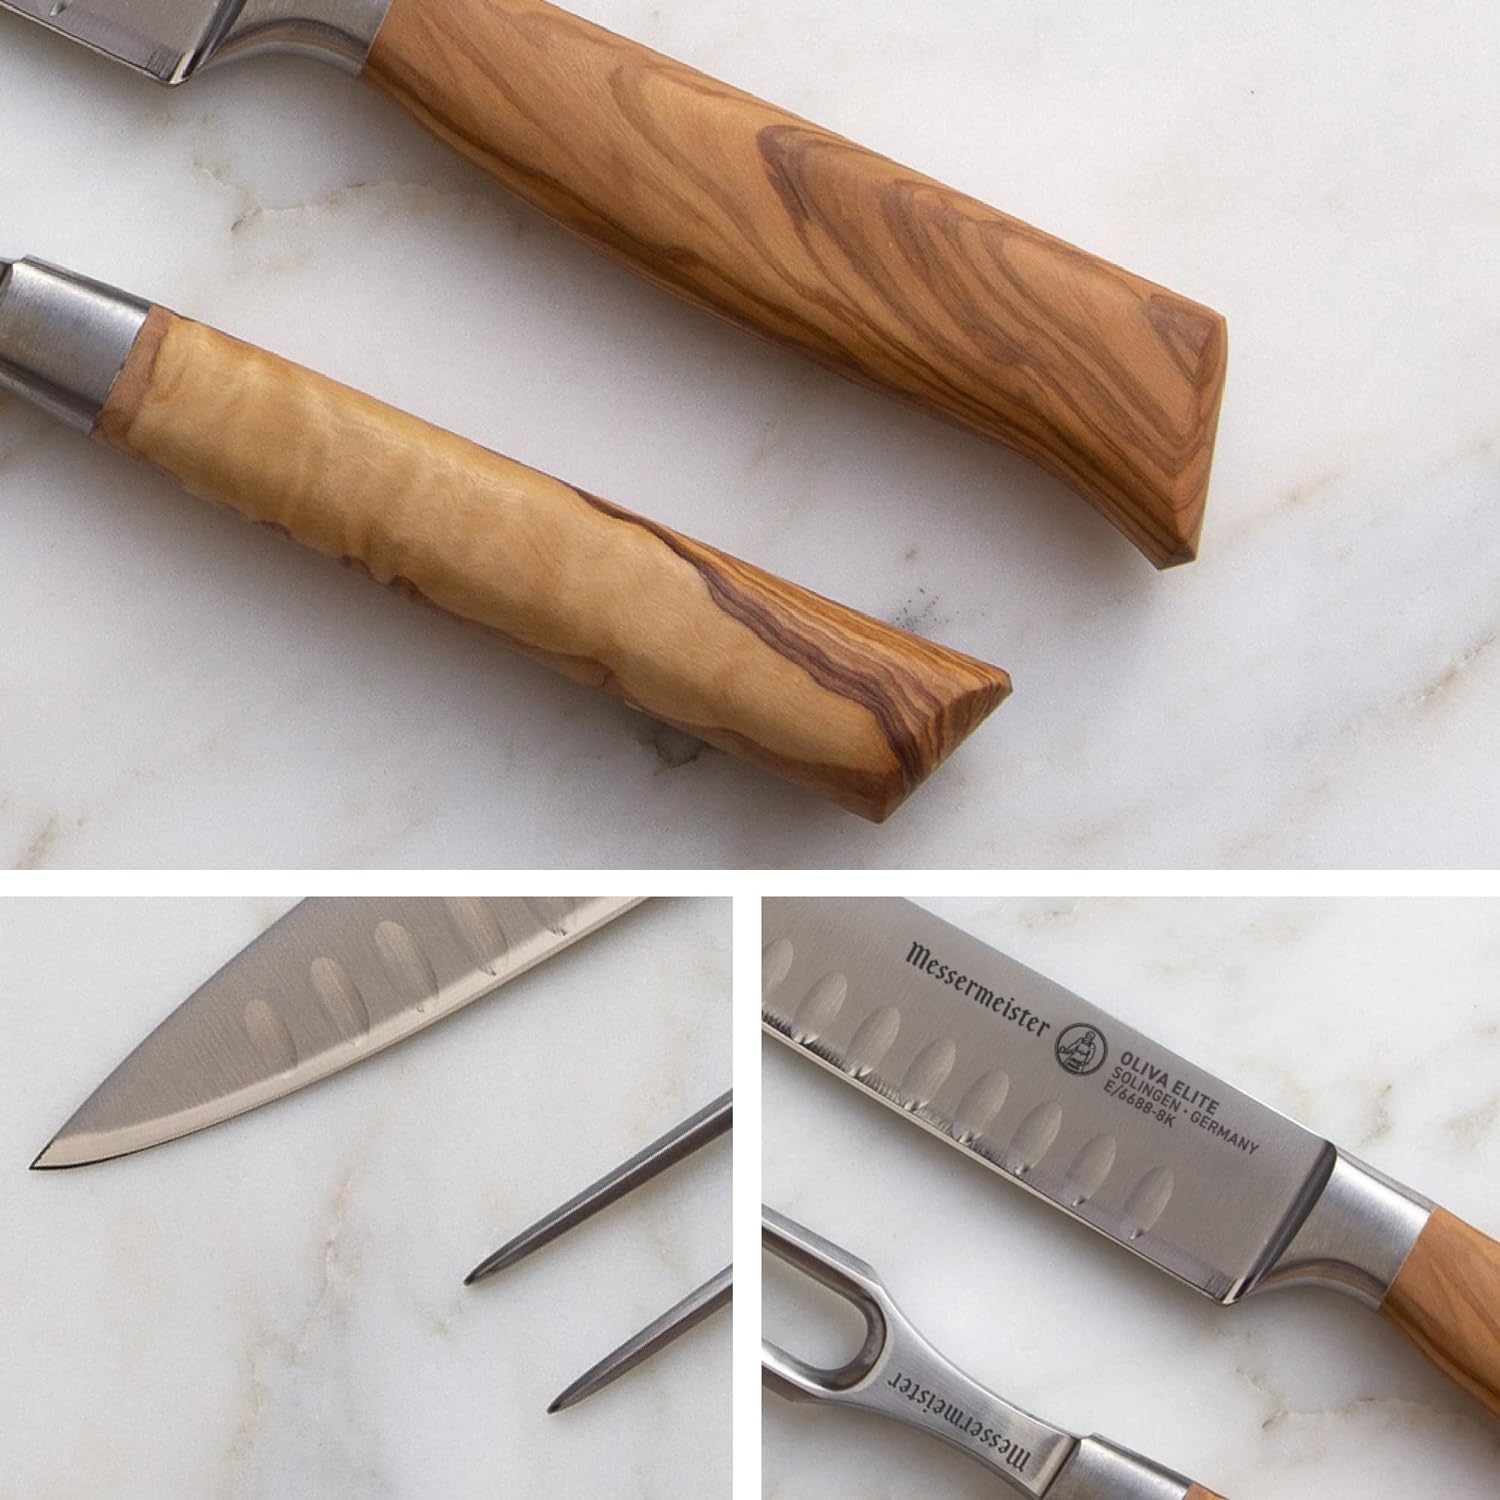 Messermeister Oliva Elite Kullenschliff Carving Knife Set - Includes 8” Kullenschliff Carving Knife  6” Straight Carving Fork - German Steel Alloy Blade  Mediterranean Wood Handle